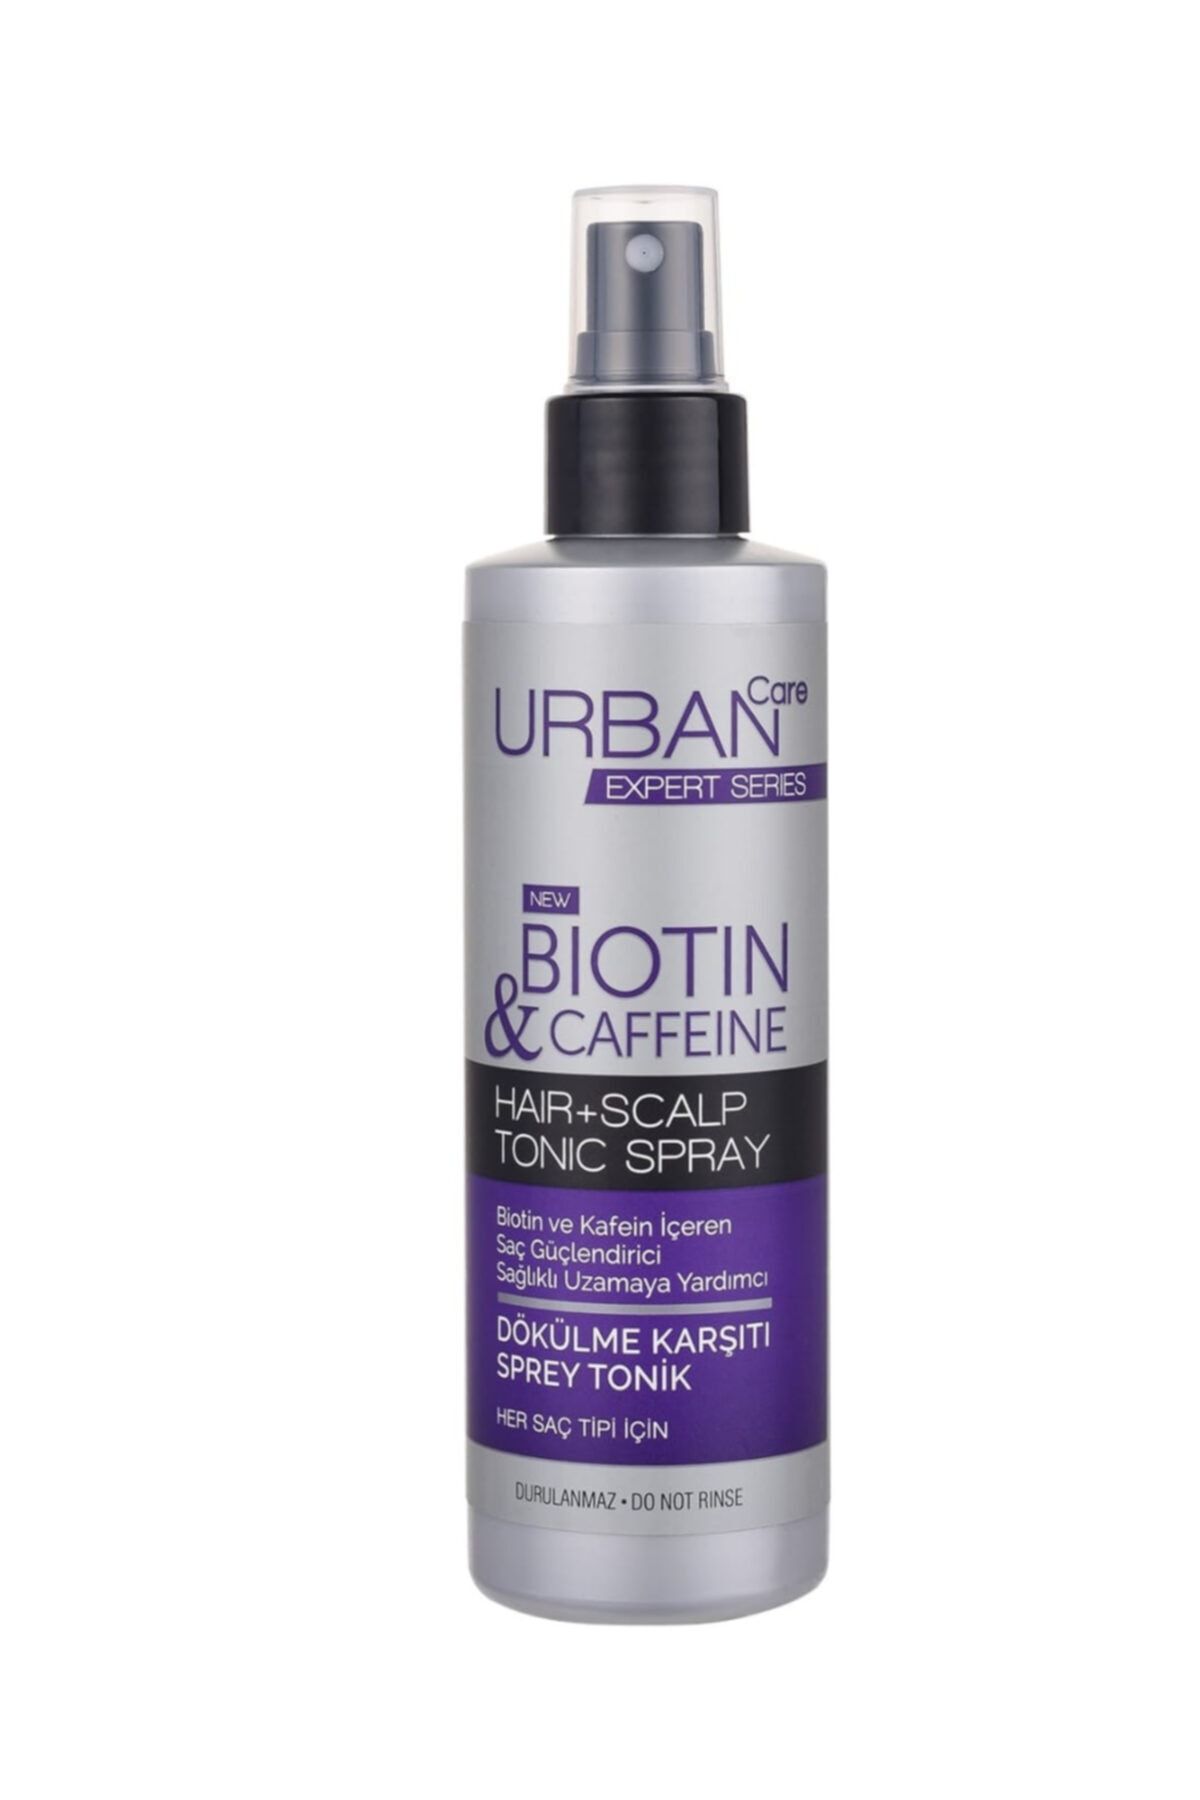 Urban Care Expert Series Biotin & Caffeine Hair + Scalp Tonic Spray 200ml